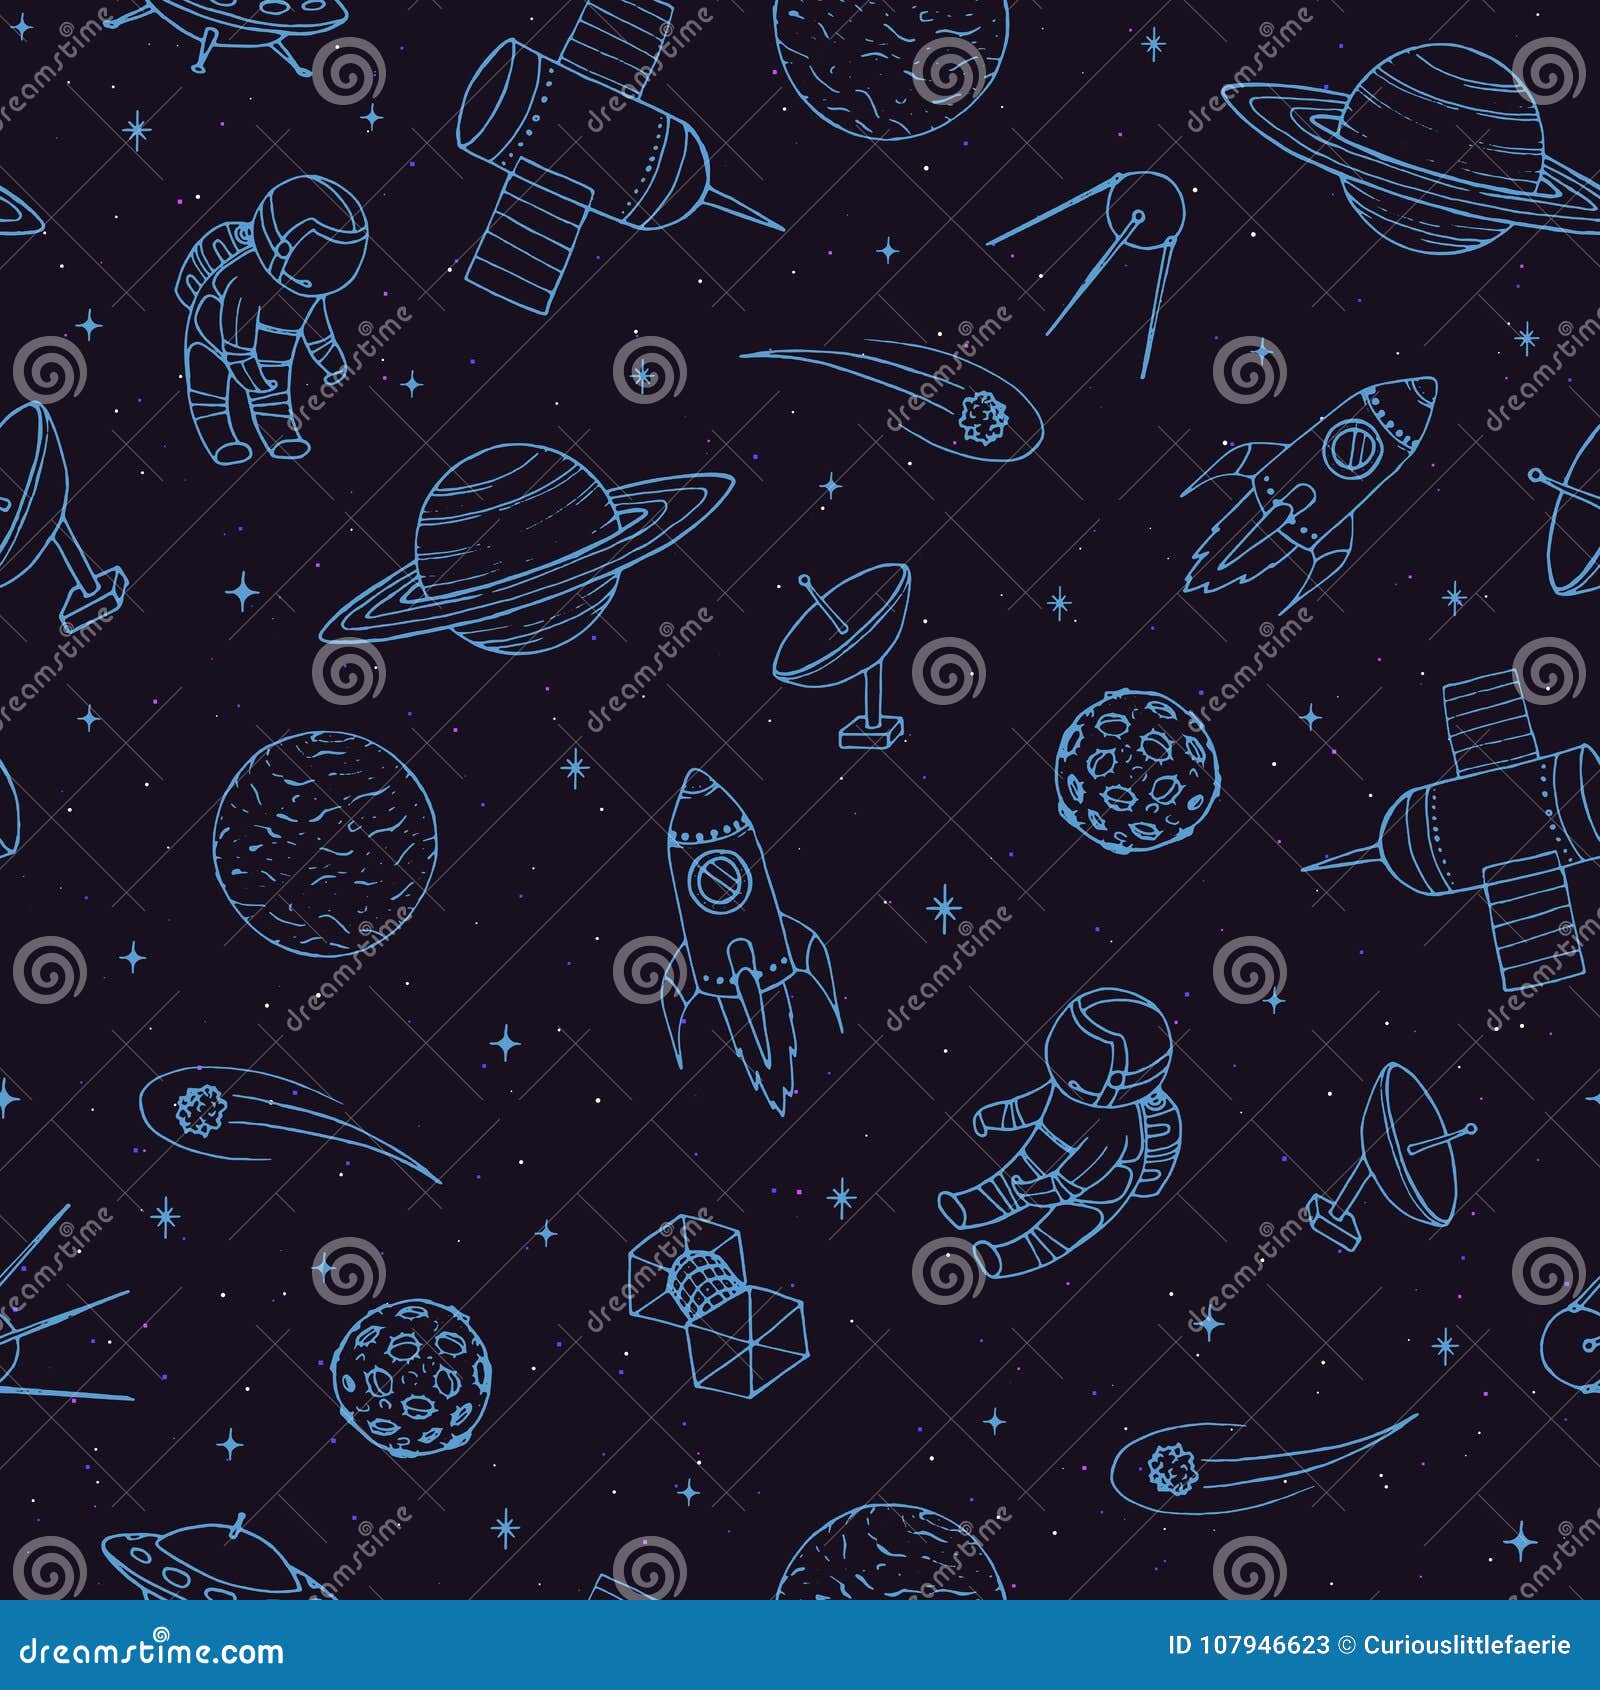 hand drawn  seamless pattern with cosmonauts, satelites, rockets, planets, moon, falling stars and ufo.